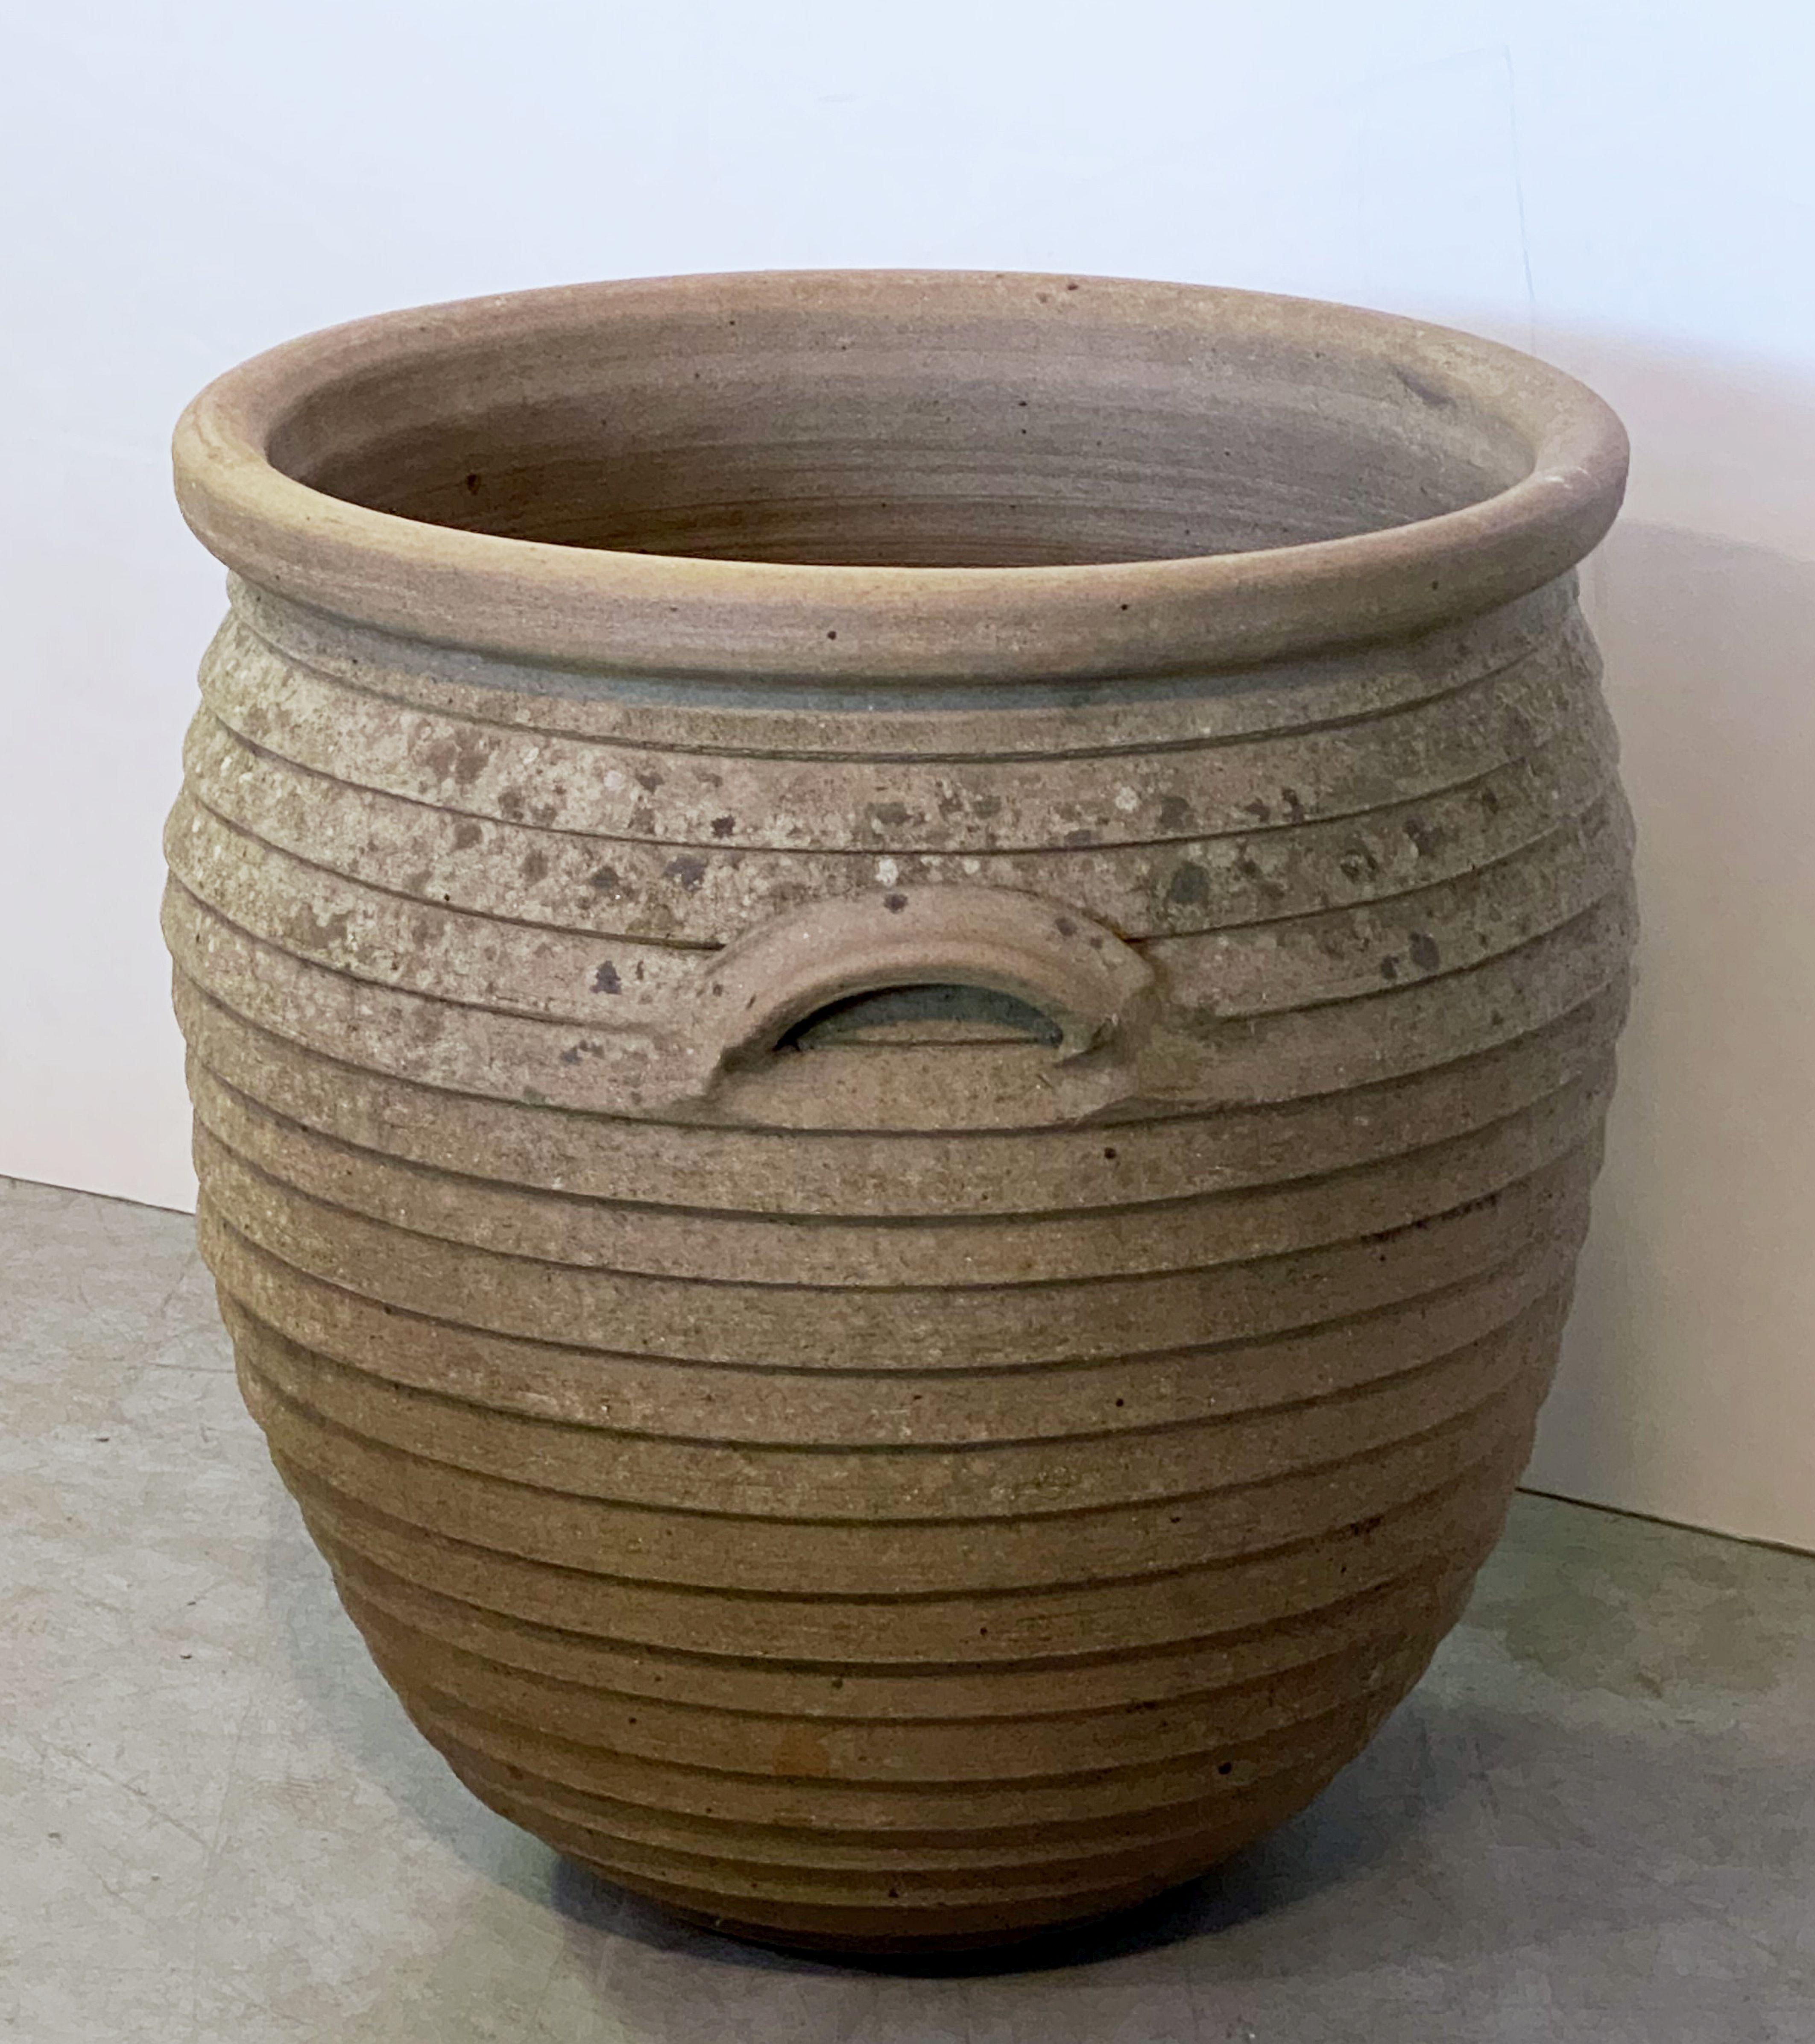 English Ribbed Terracotta Pot or Planter Jar for the Garden 9